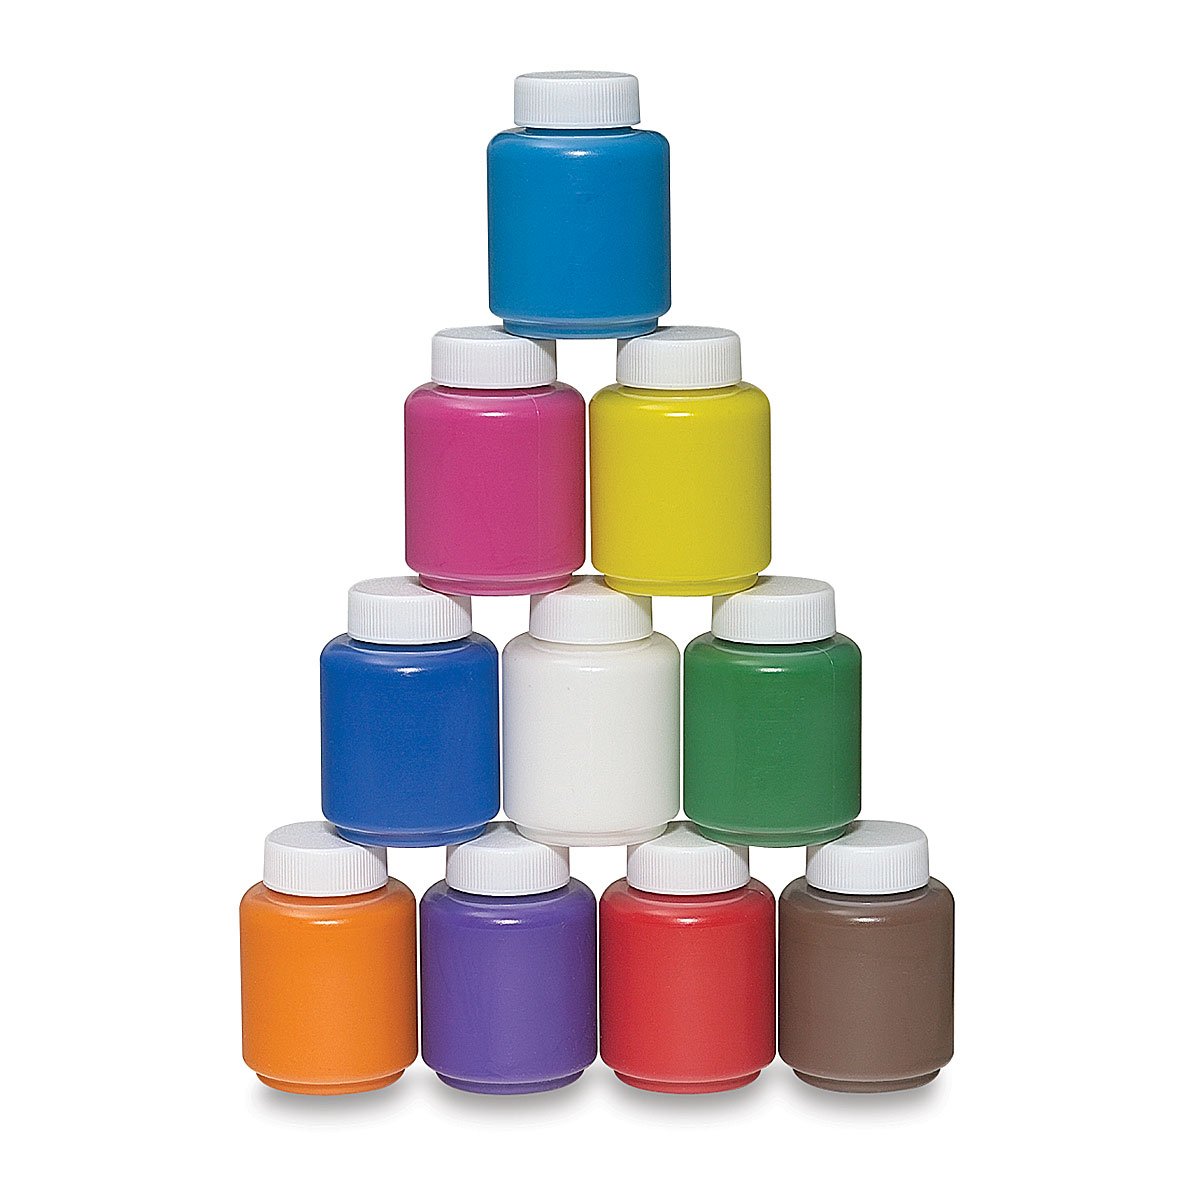 Crayola Washable Paints - Assorted, 16 oz Bottles, Set of 12 colors